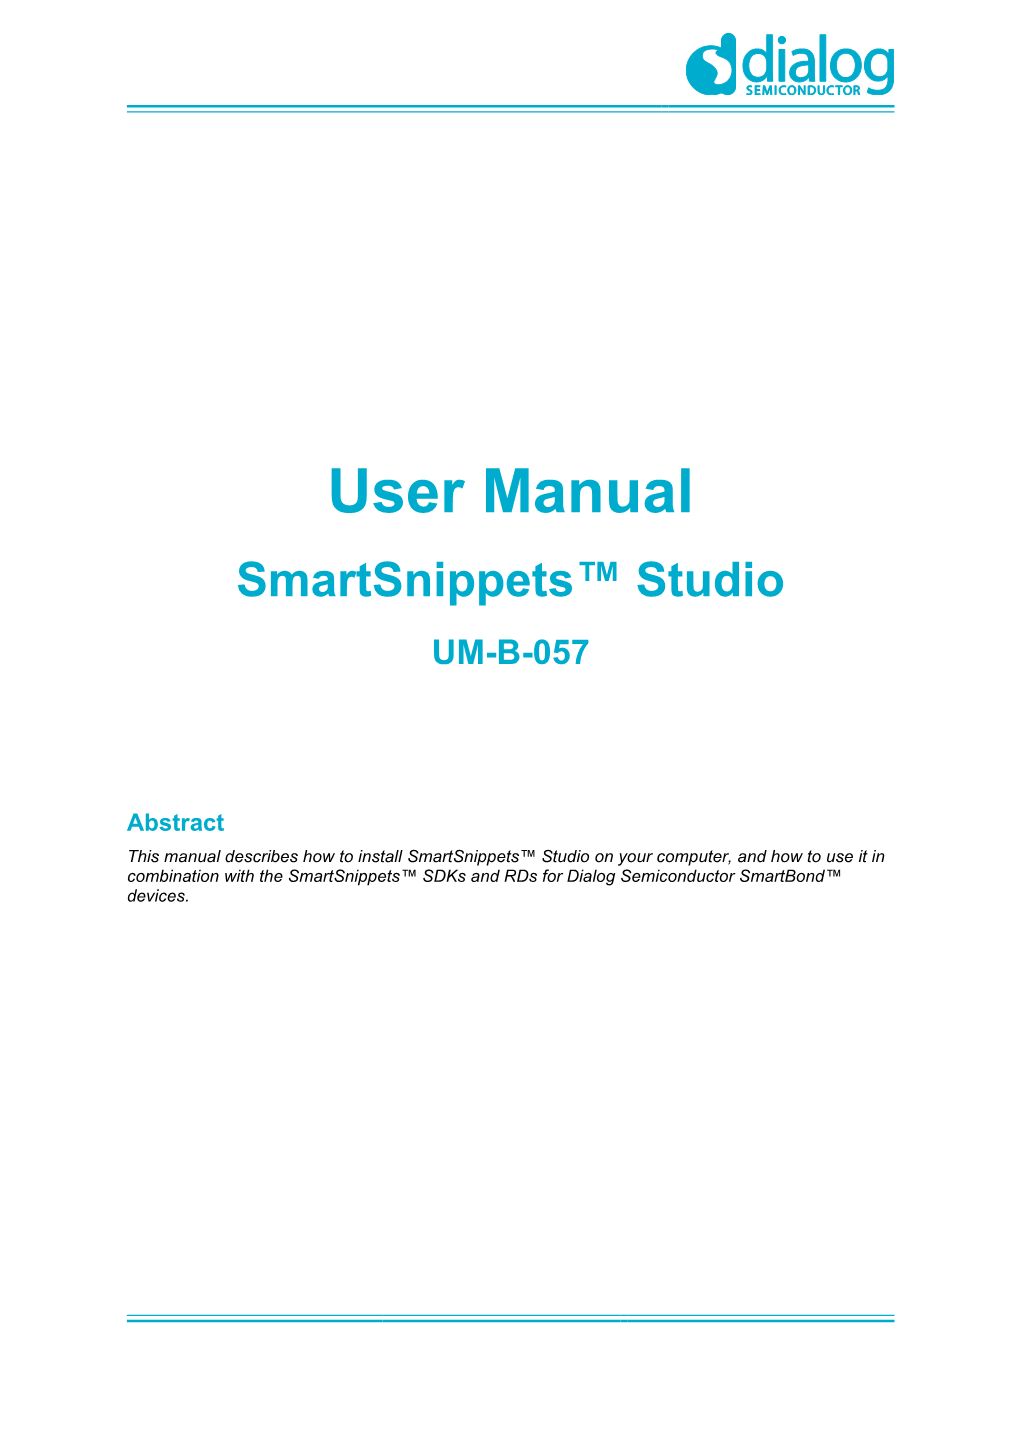 User Manual Smartsnippets™ Studio UM-B-057